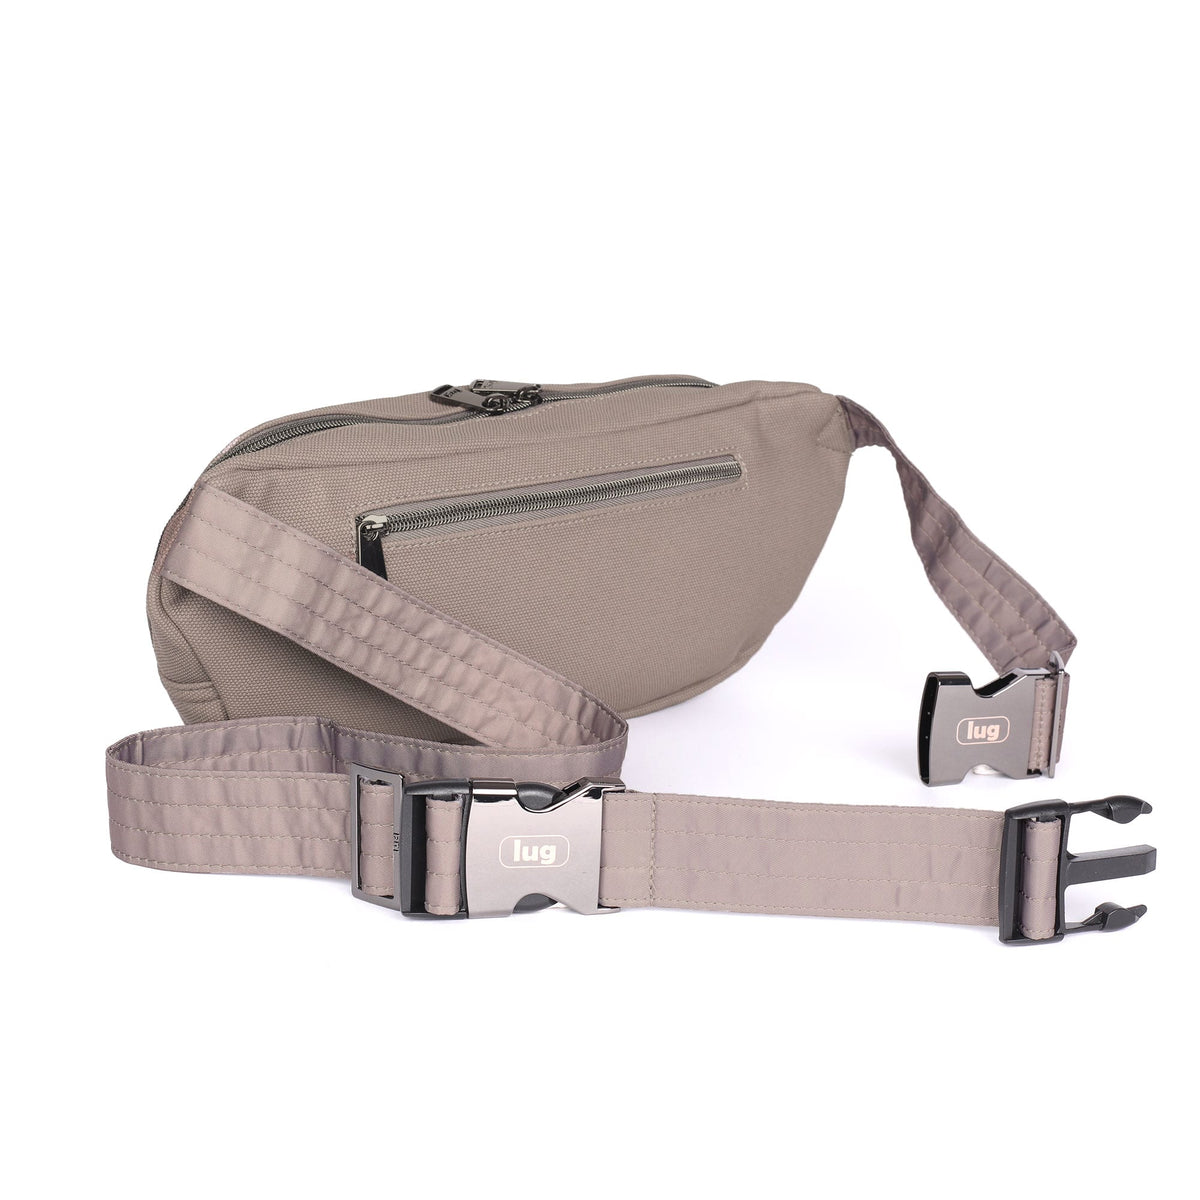 Portable Belt Extender for Fanny Pack Strap Extension Waist Bag